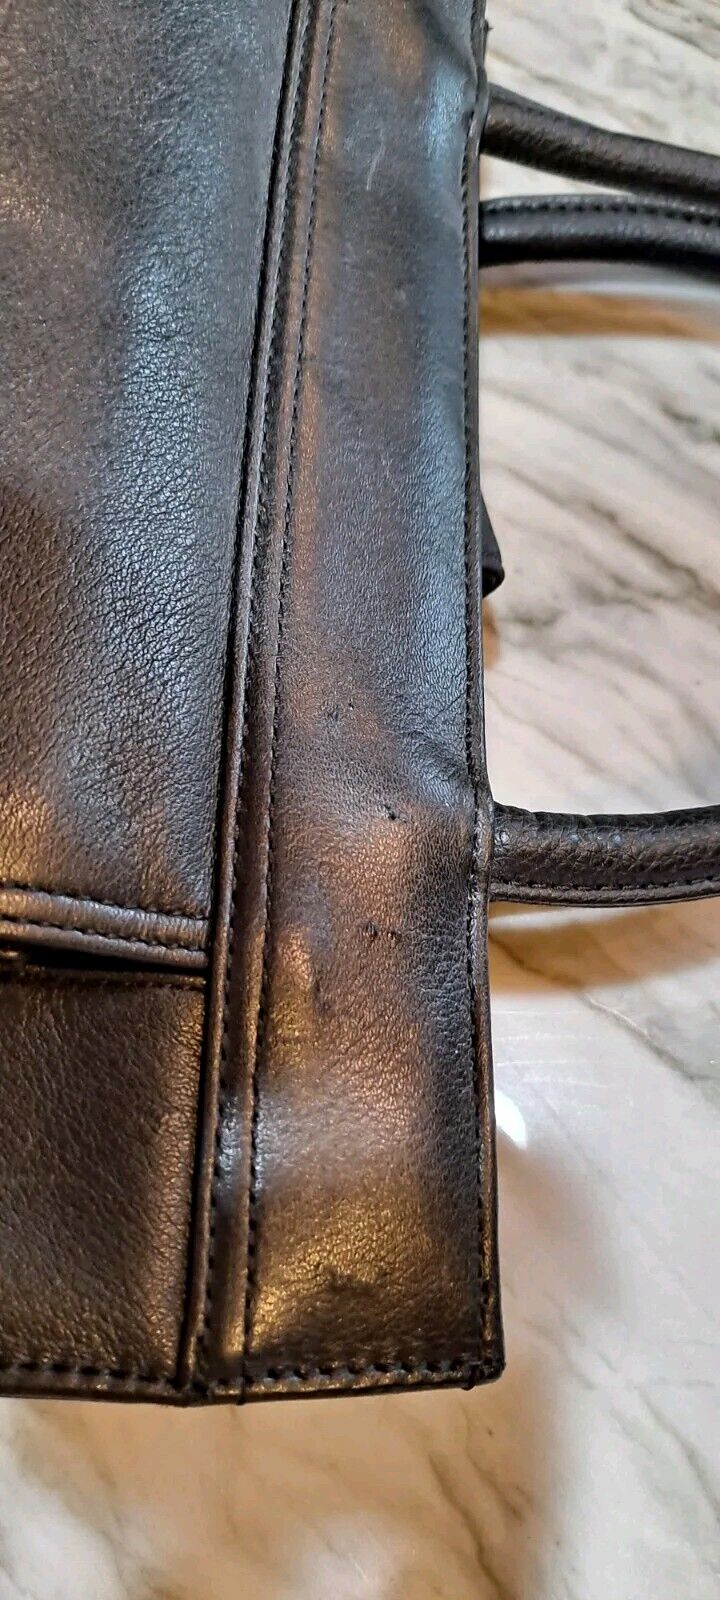 New Giani Bernini Handbag Black Pebble Leather Tote Purse W Outer Compartment 